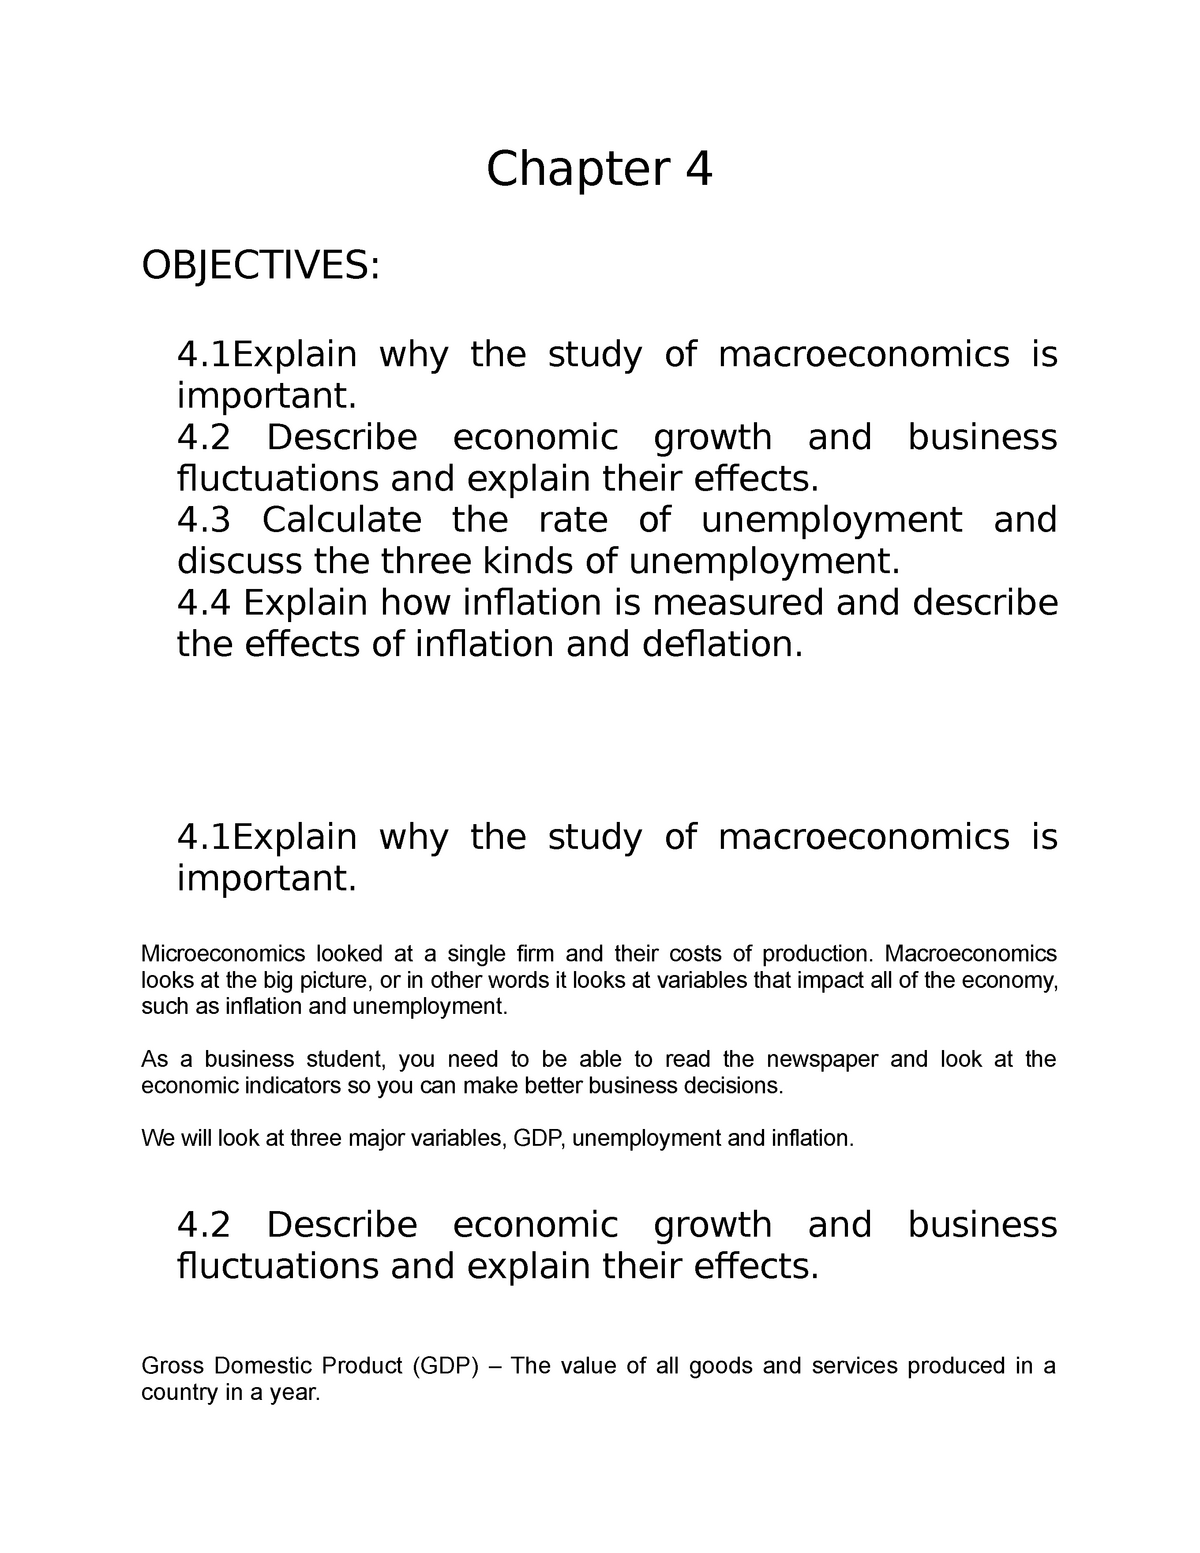 macroeconomics objectives essay